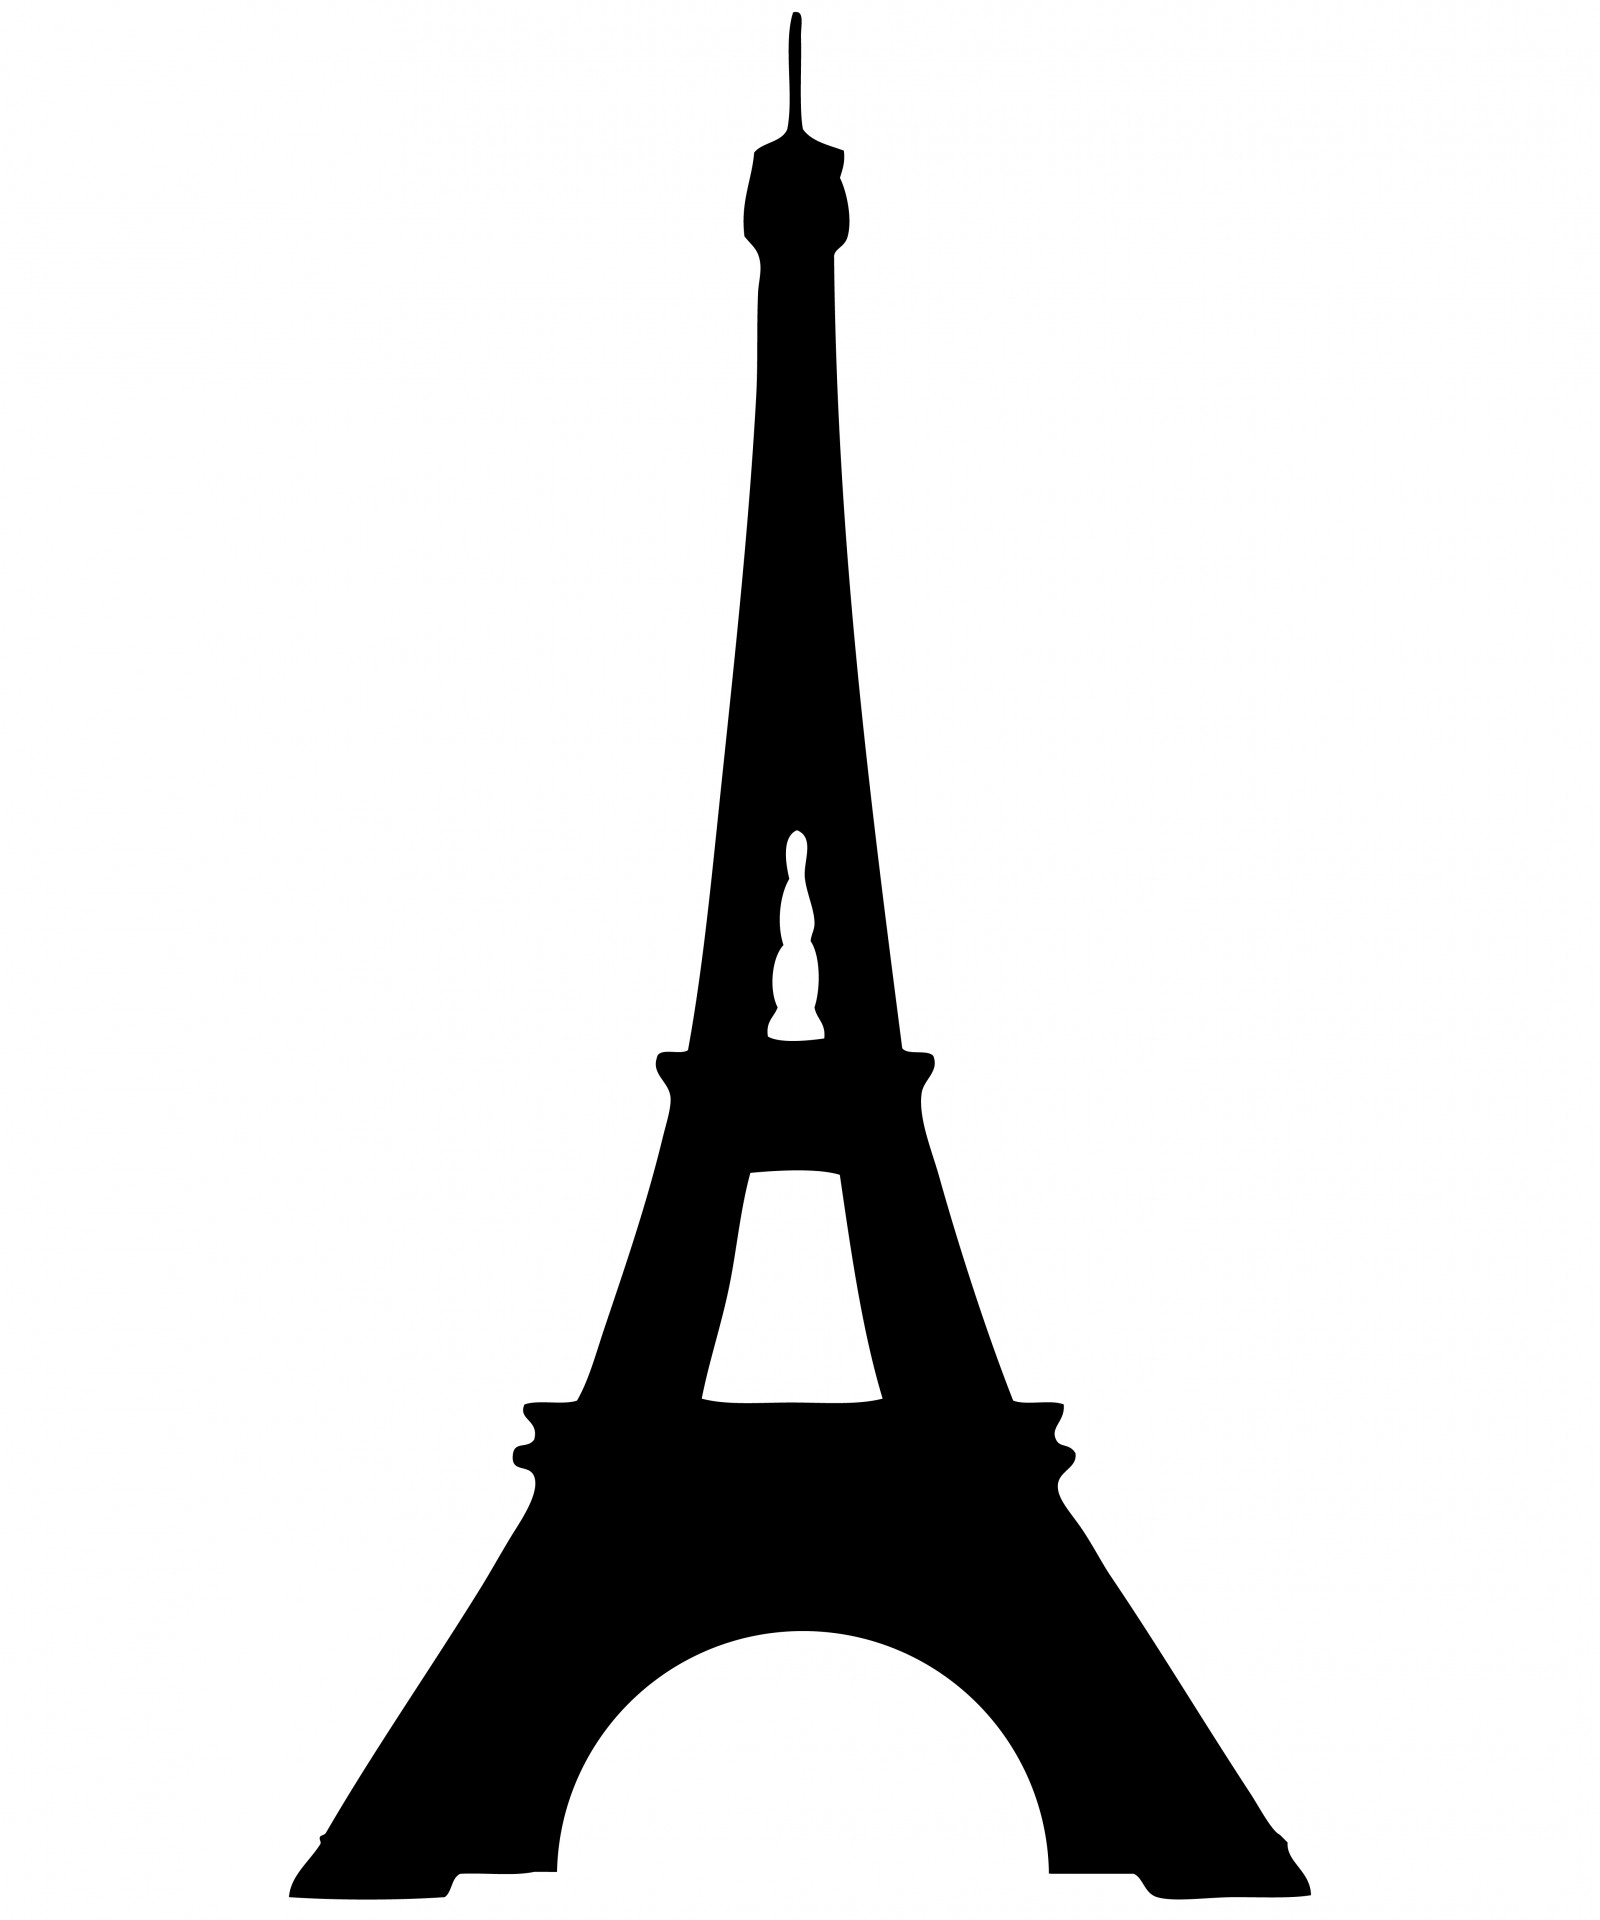 Eiffel tower hd clipart download - ClipartFox